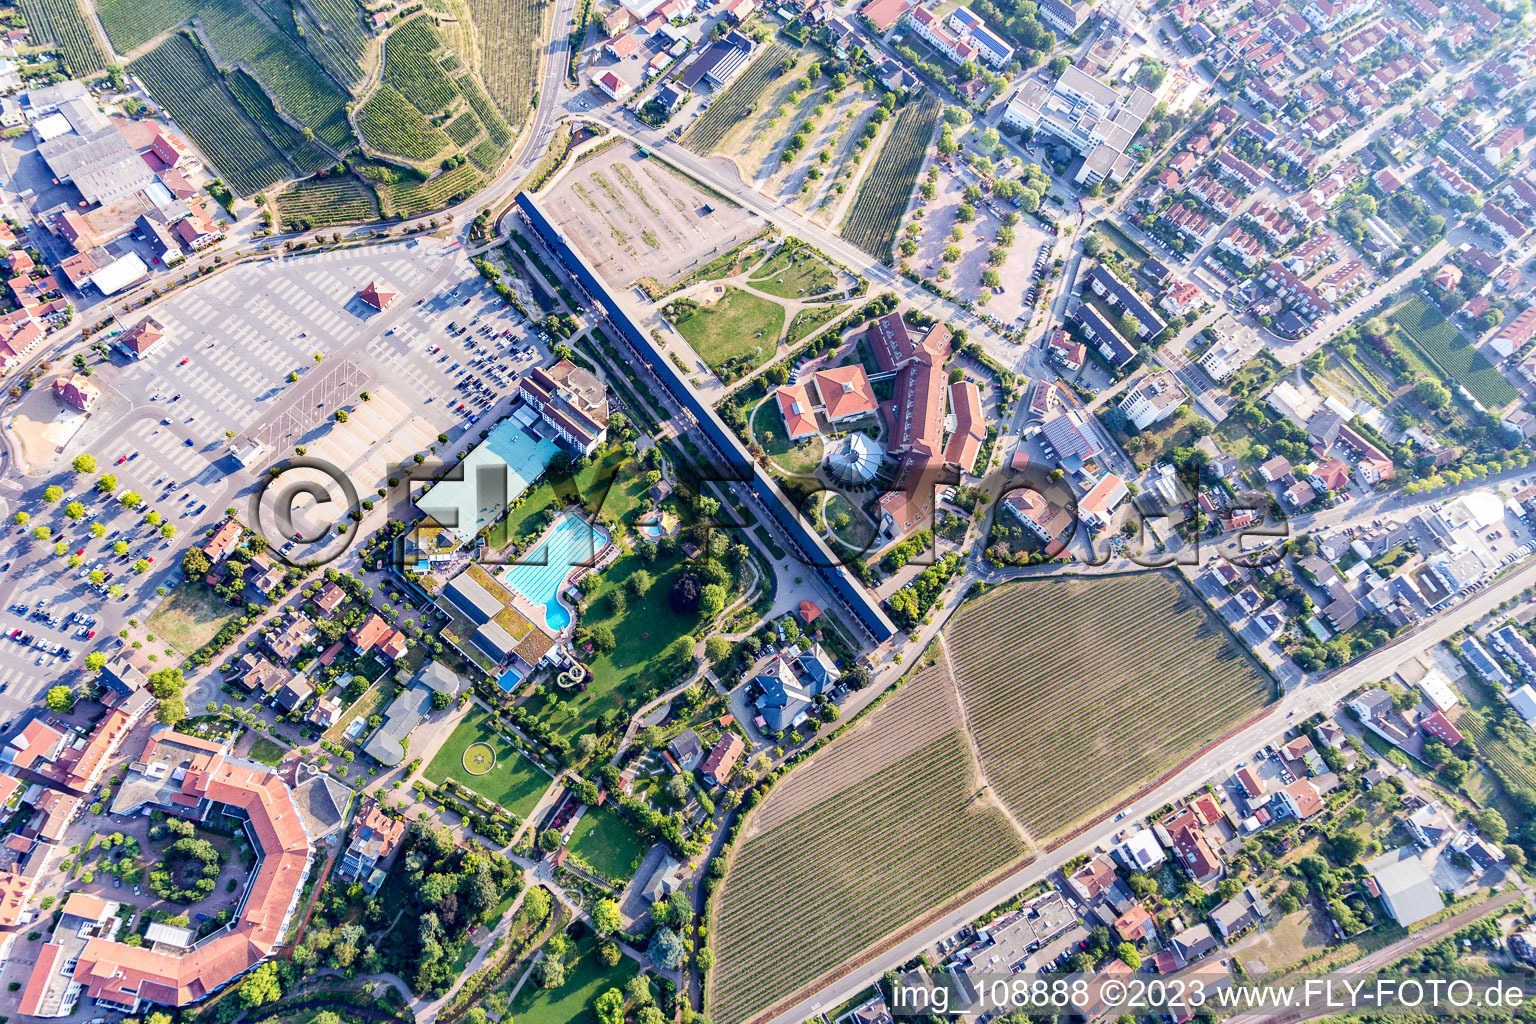 Aerial view of Graduation building Saline at Wurstmarktplatz in Bad Dürkheim in the state Rhineland-Palatinate, Germany